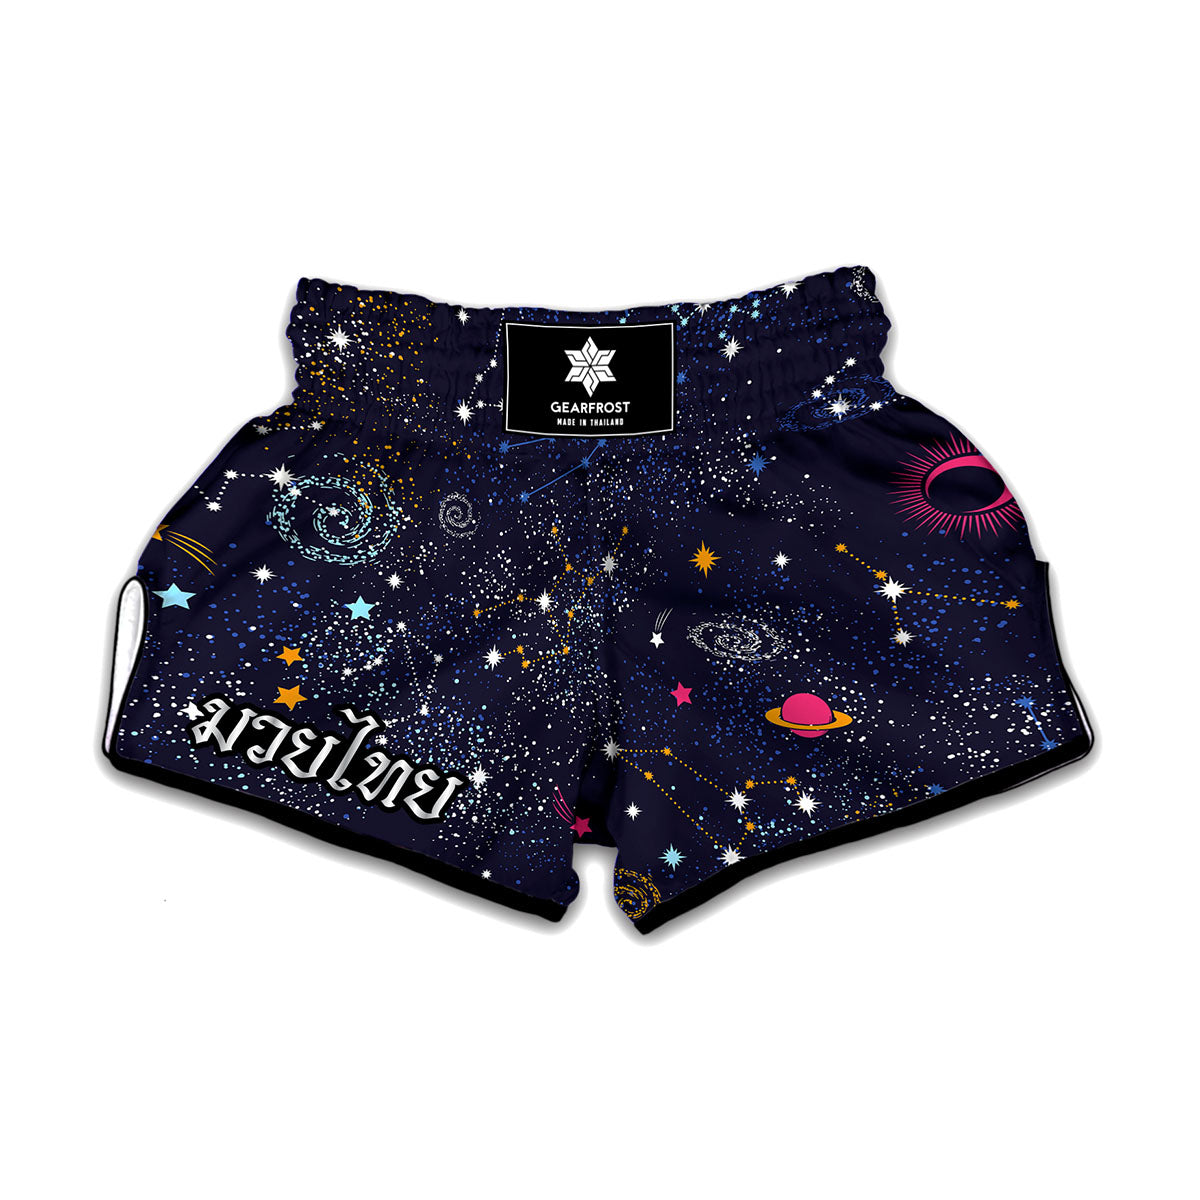 Zodiac Star Signs Galaxy Space Print Muay Thai Boxing Shorts